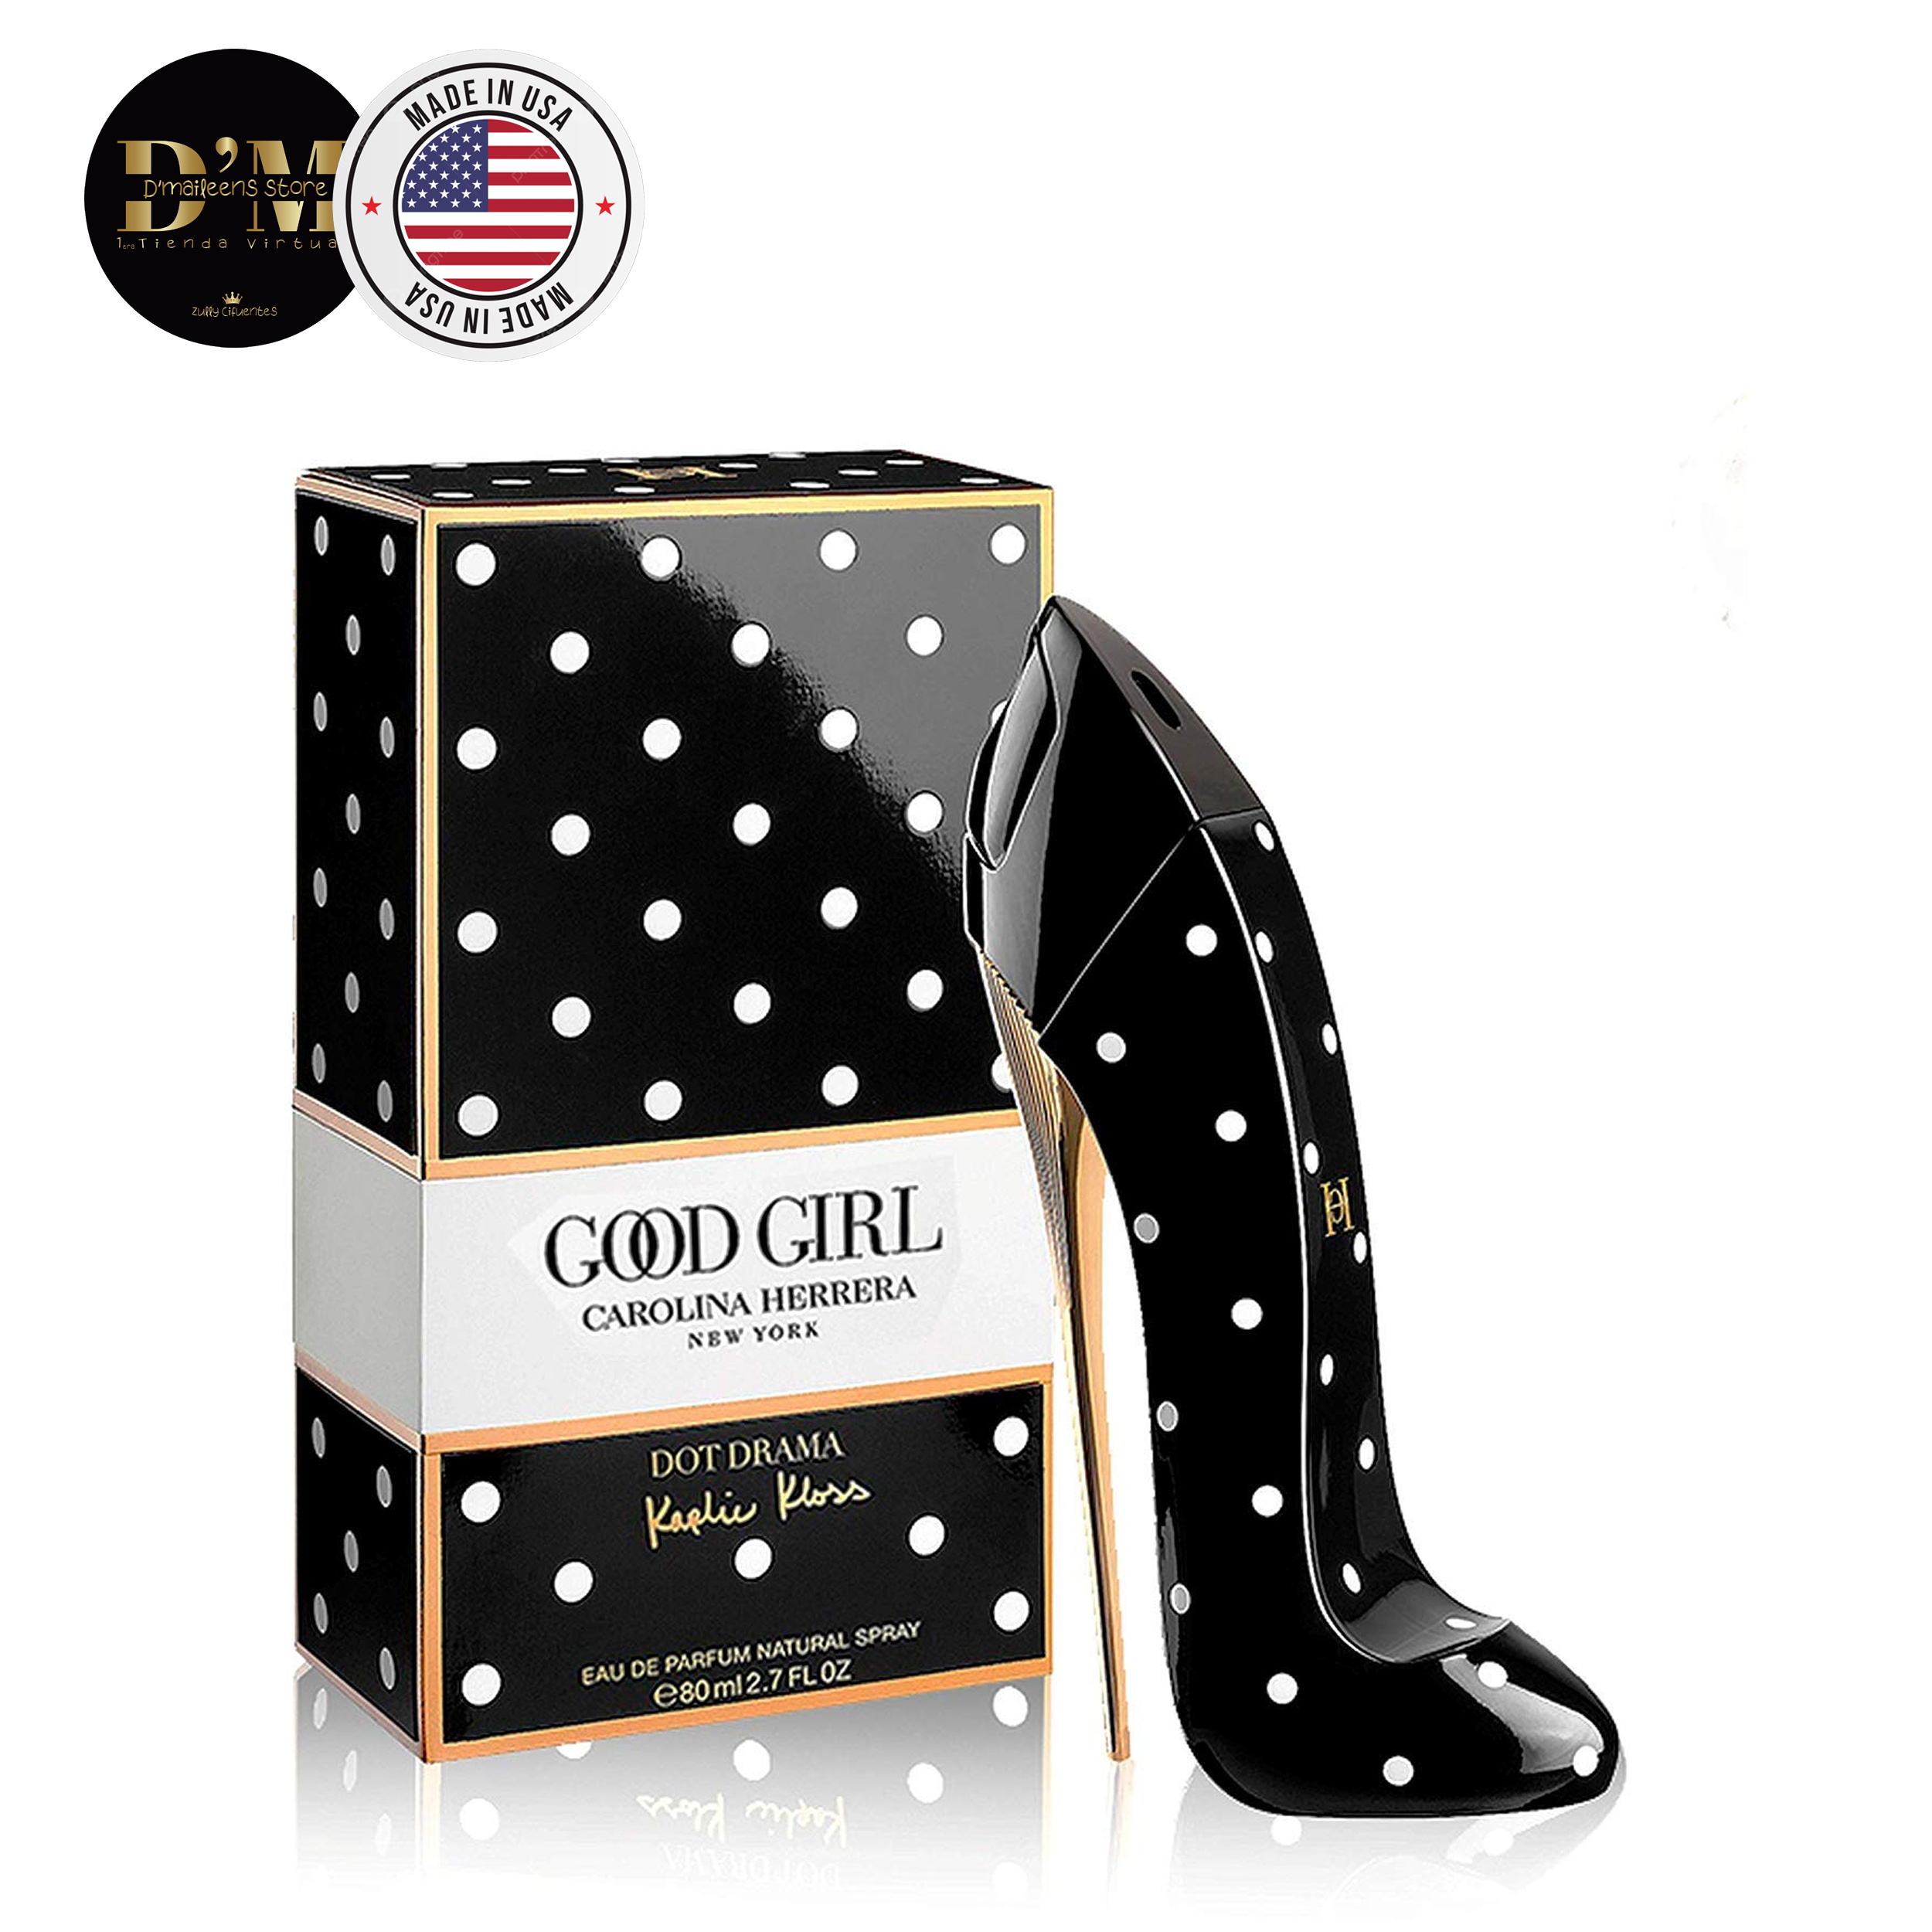 Perfume Good Girl Dot Drama Collector Edition Carolina Herrera     (Replica Con Fragancia Importada)- Mujer